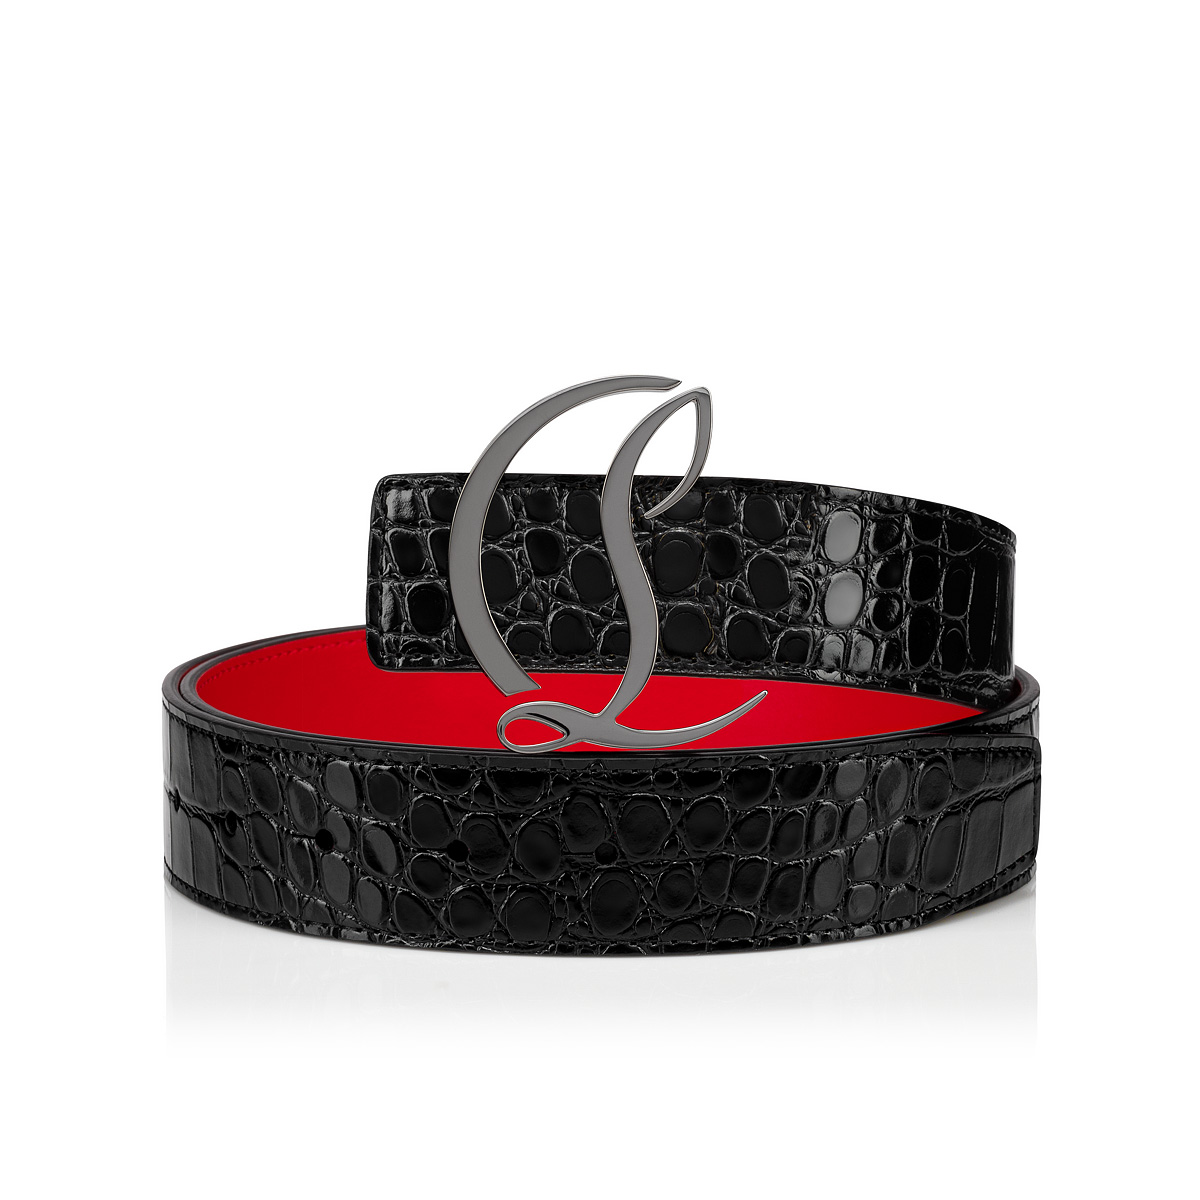 CL Logo Buckle Leather Belt